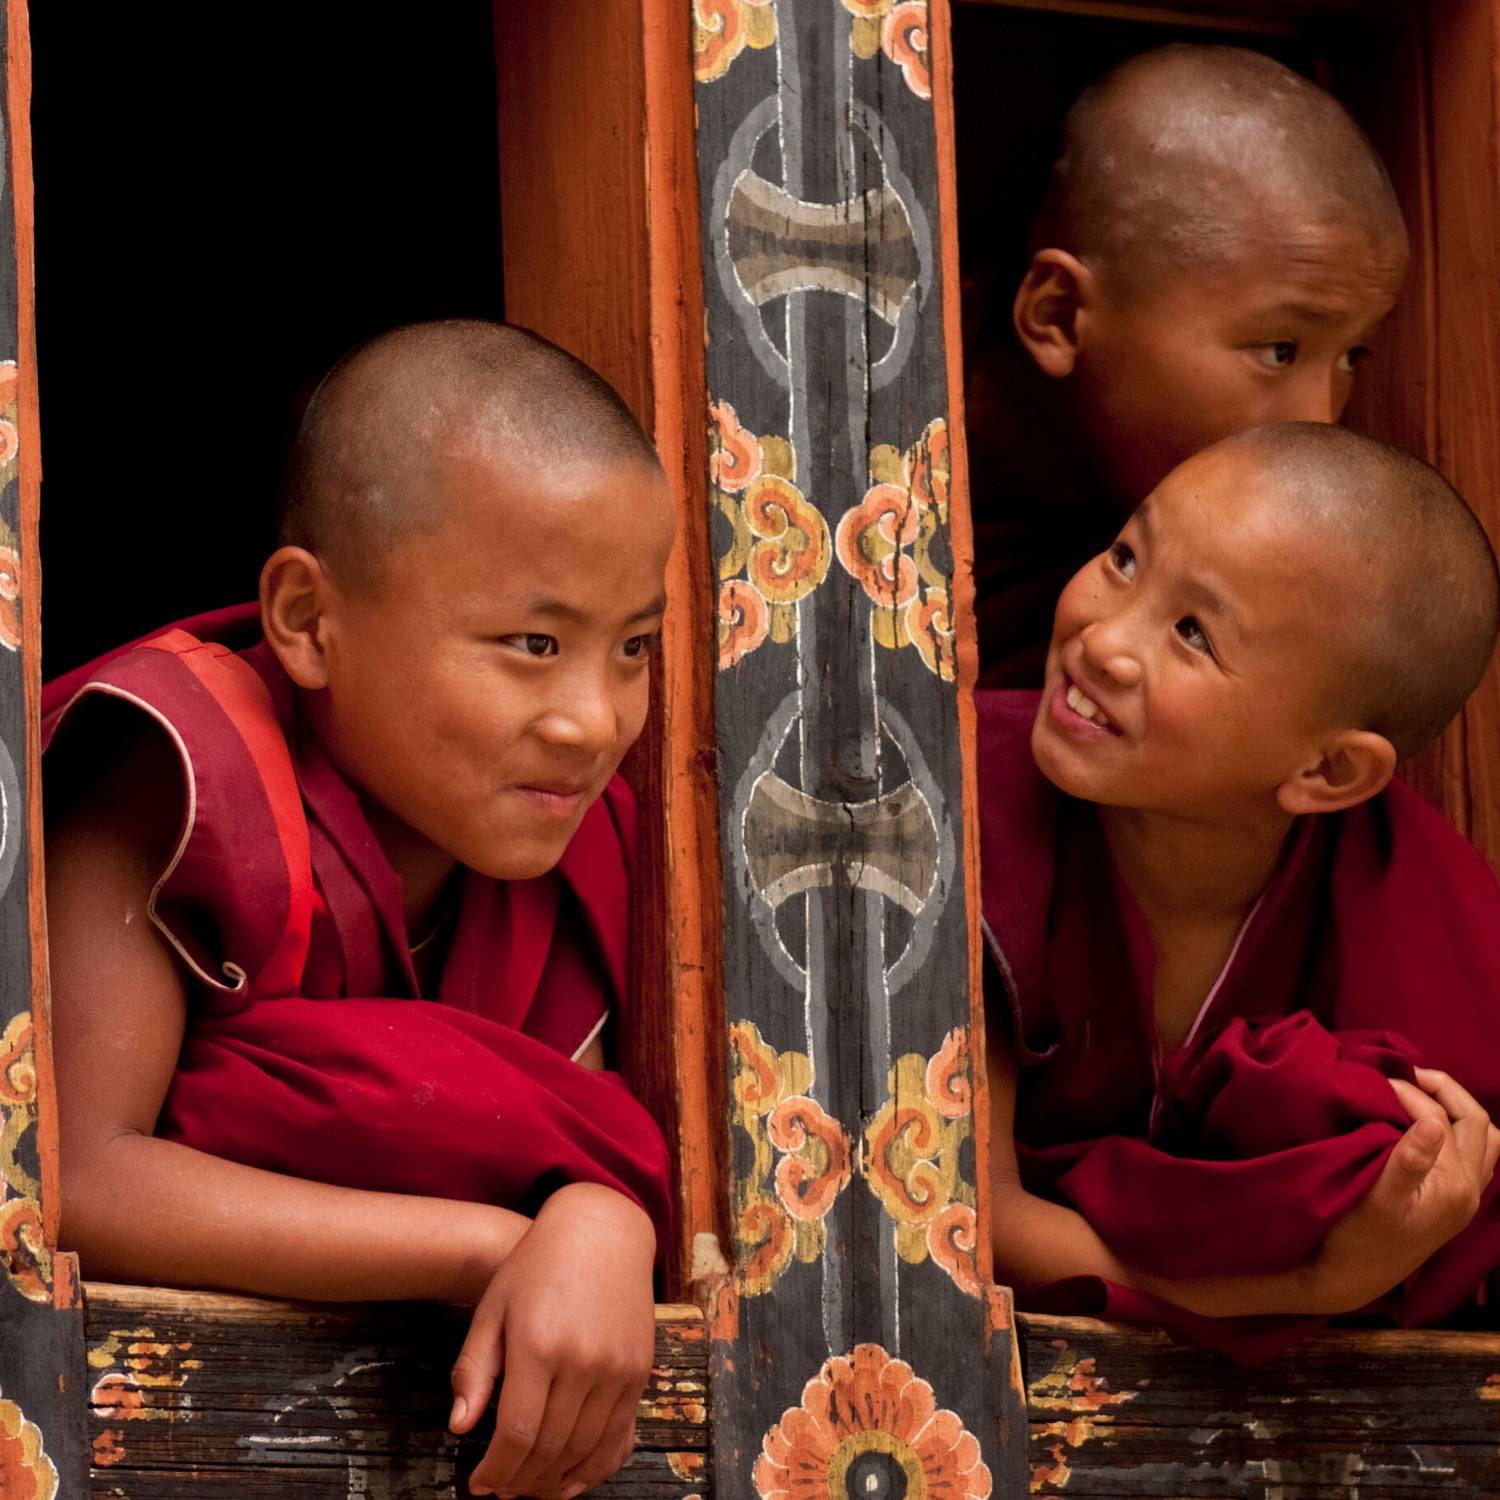 Young Buddhist Monks Bhutan Photography Tour with professional photographer Ignacio Palacios.